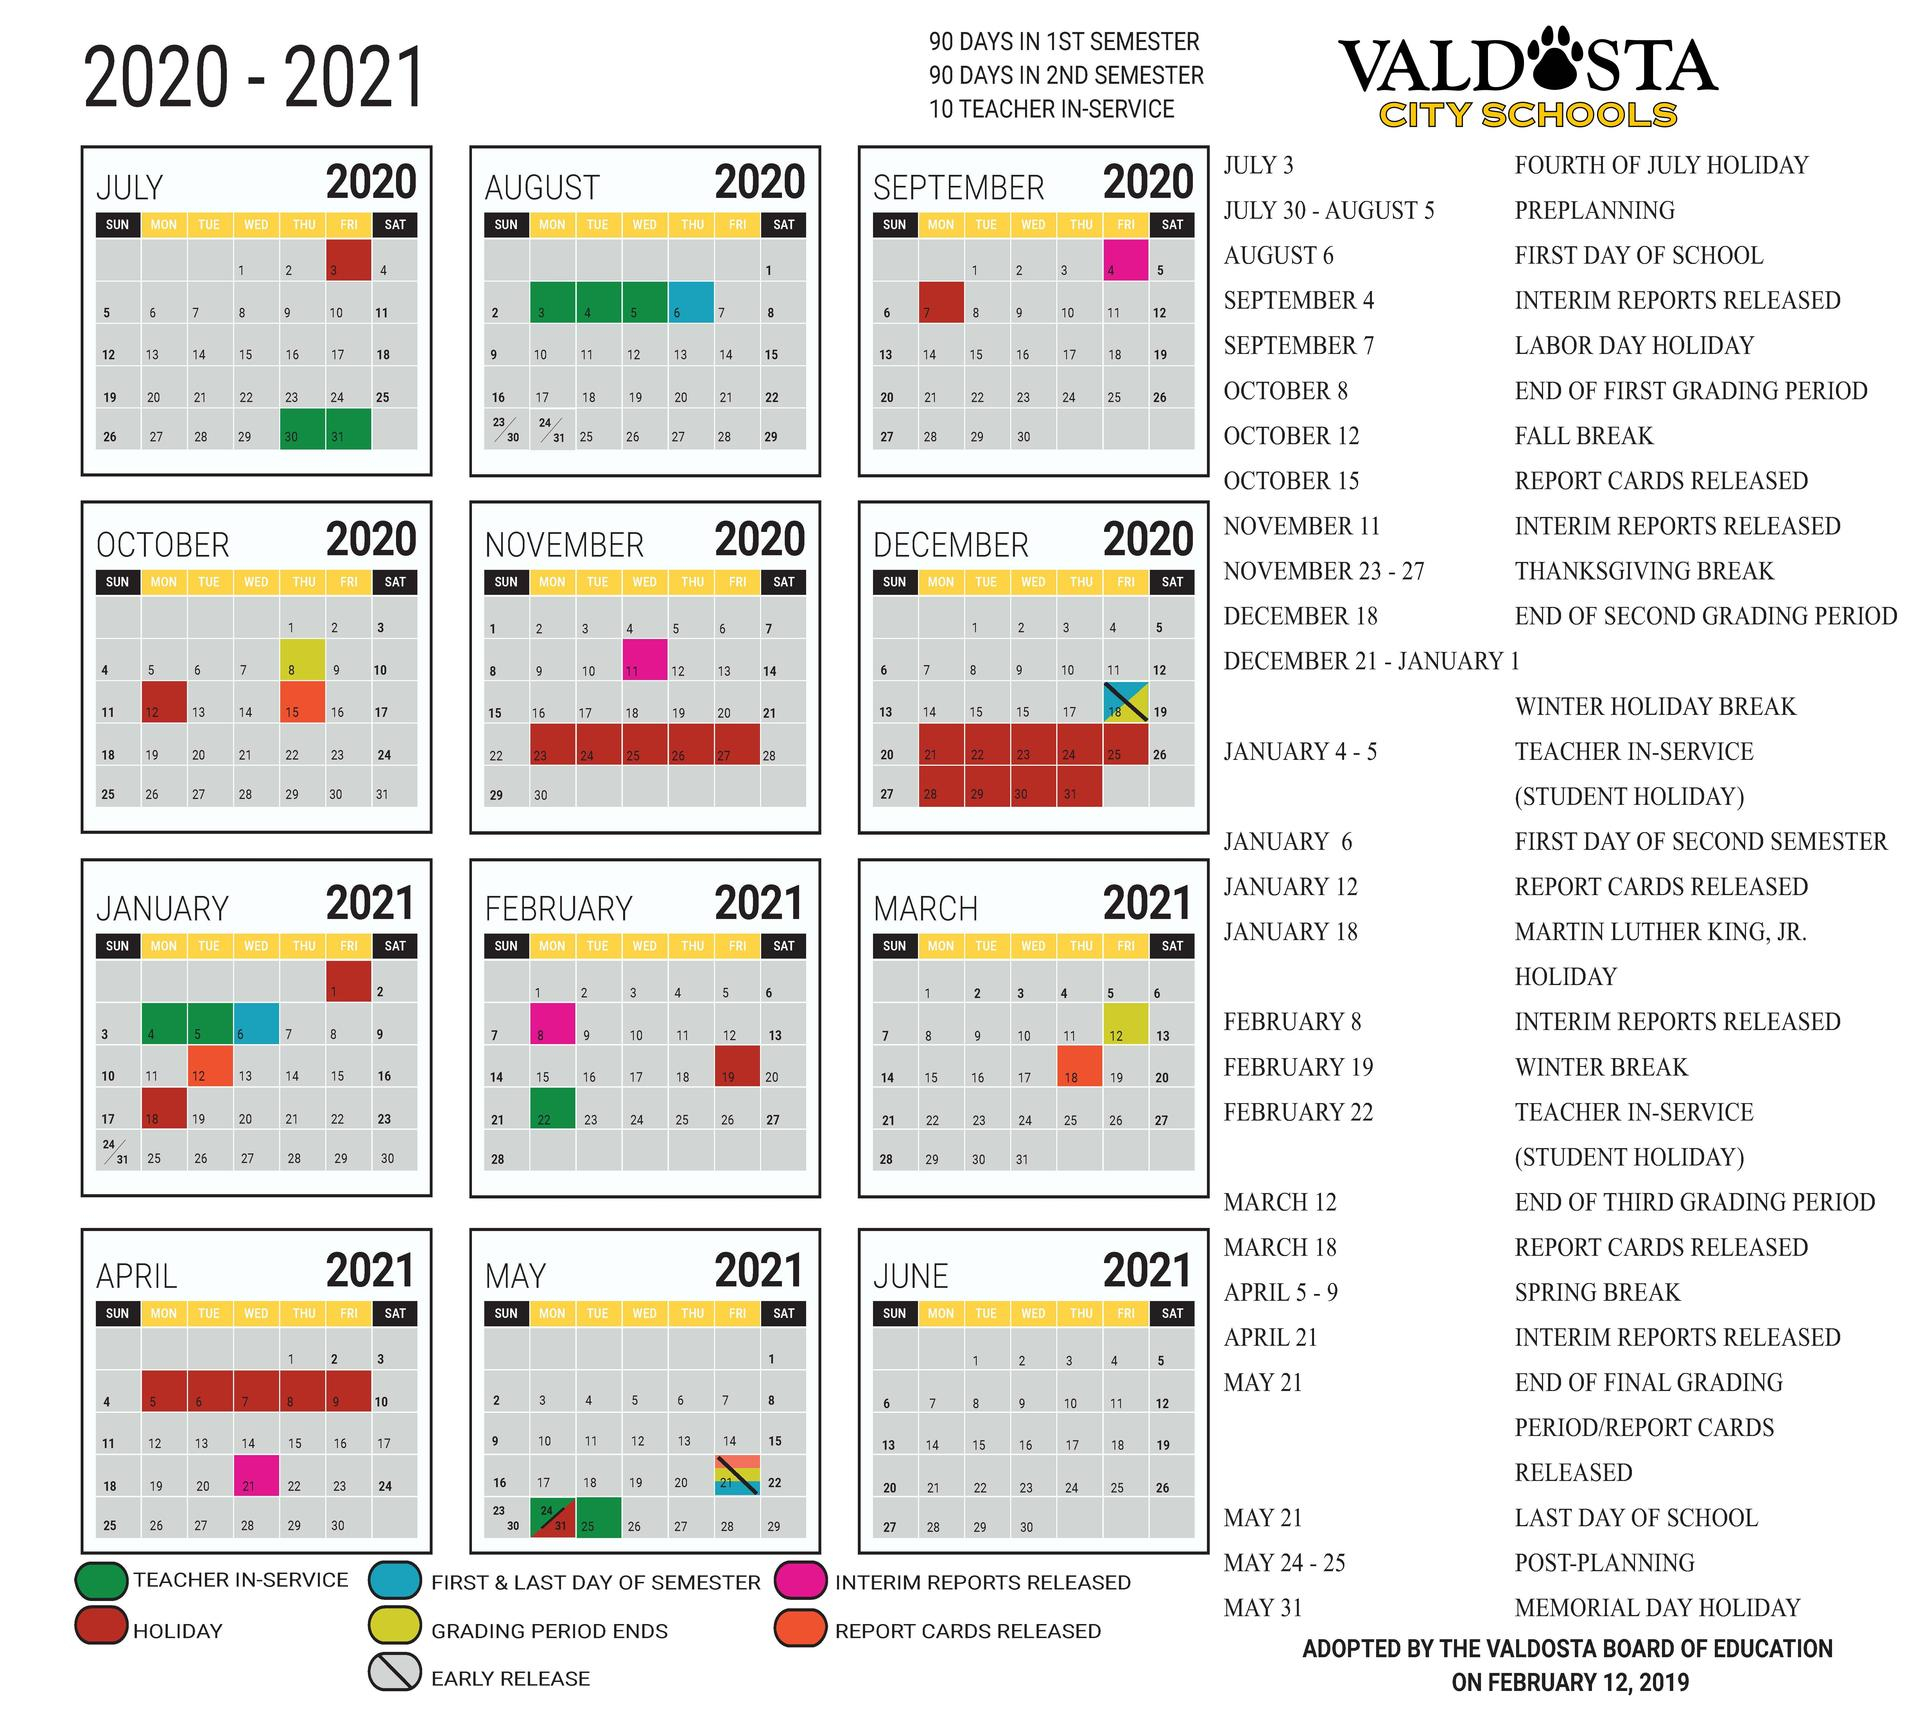 School Calendar 2020 To 2021 | Free Printable Calendar